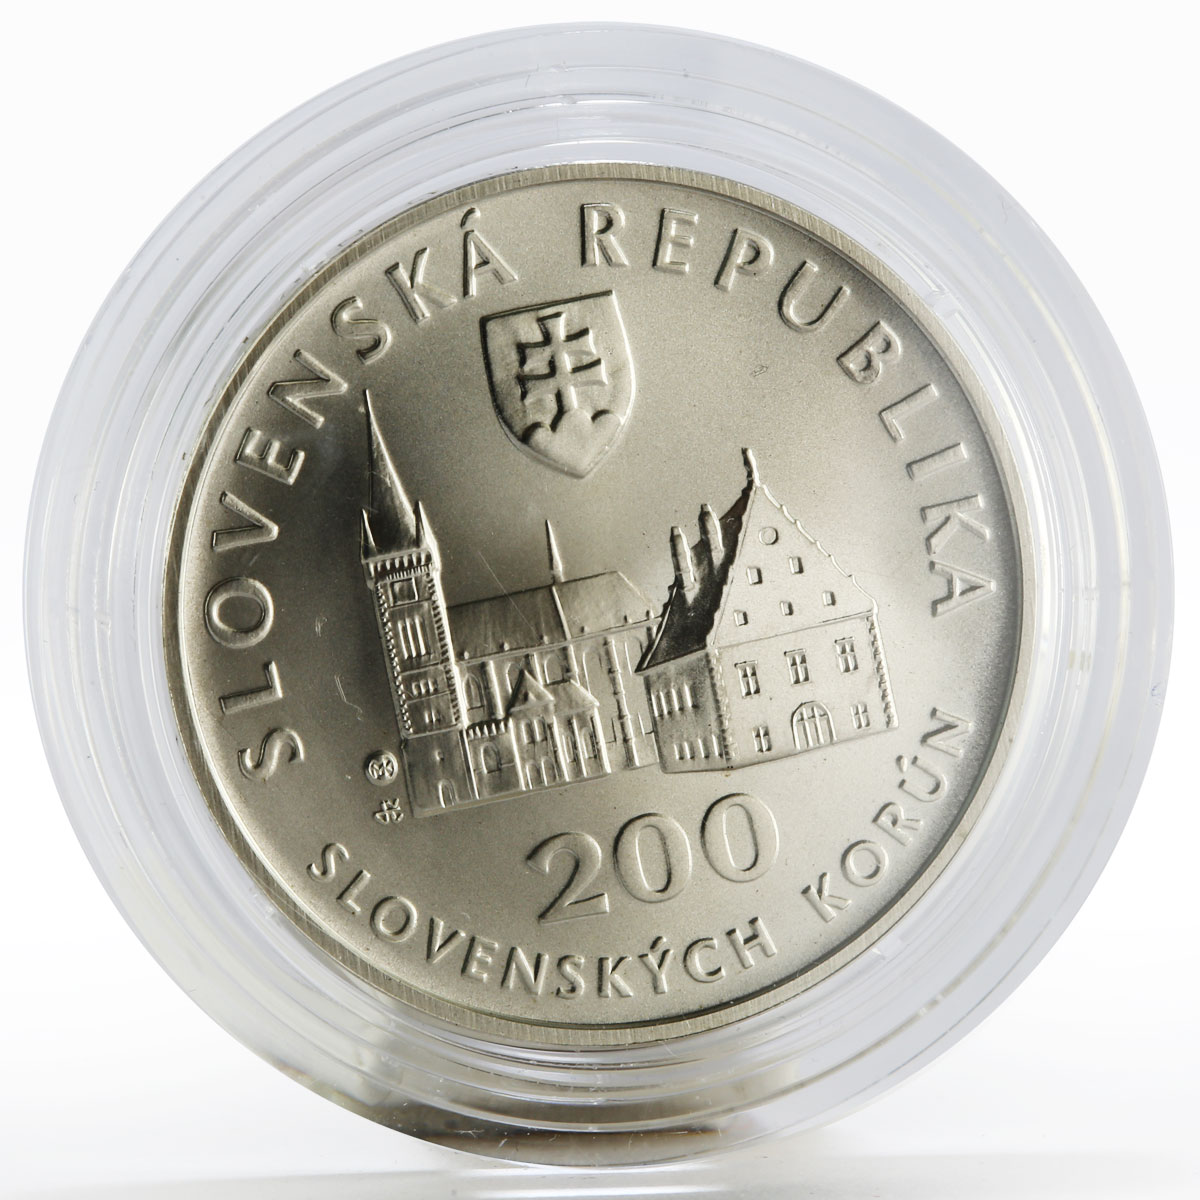 Slovakia 200 korun World Heritage series The Bardejov City View silver coin 2004